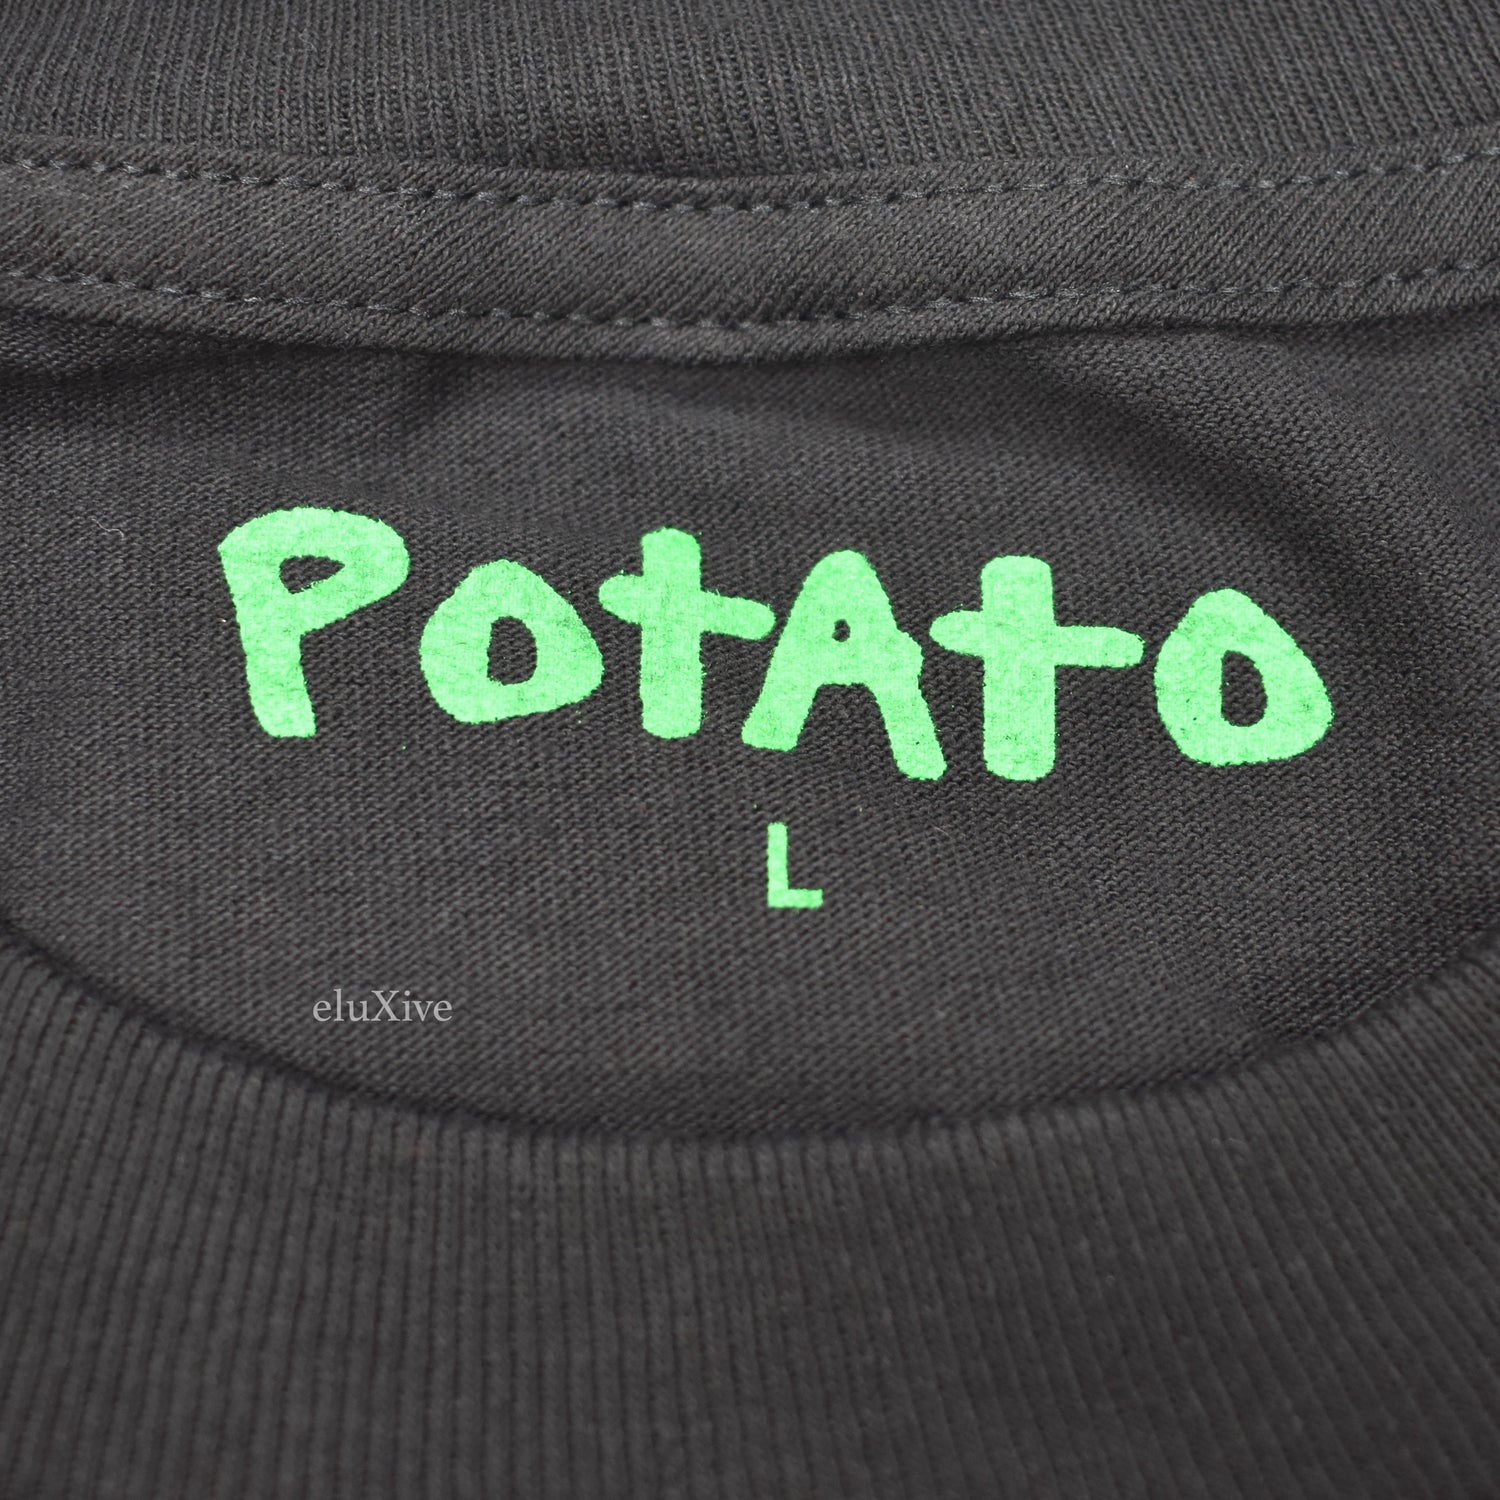 imran potato logo